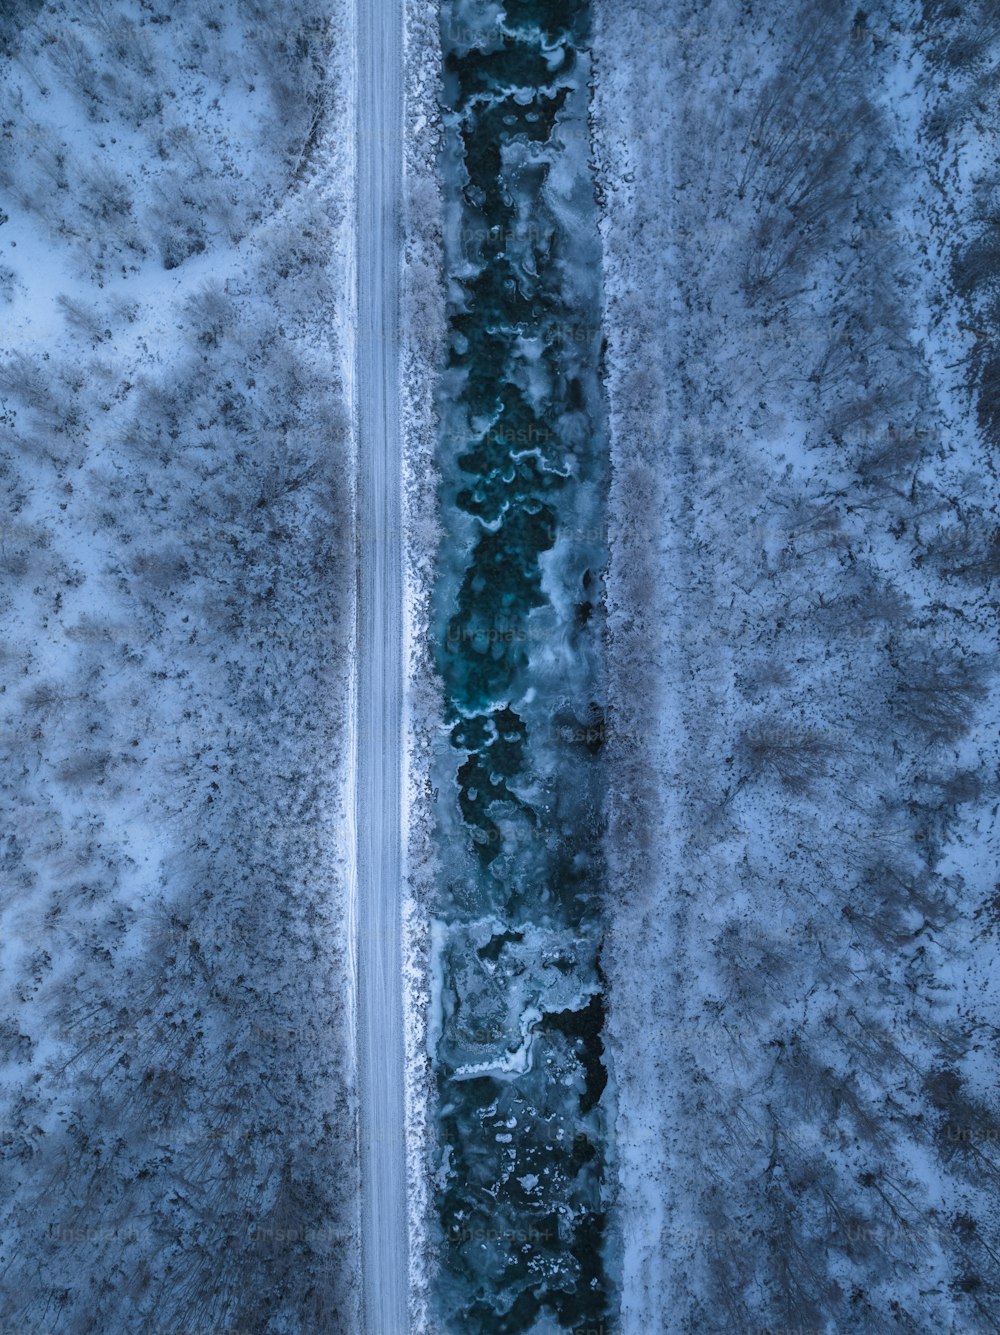 Una vista aérea de una carretera en la nieve